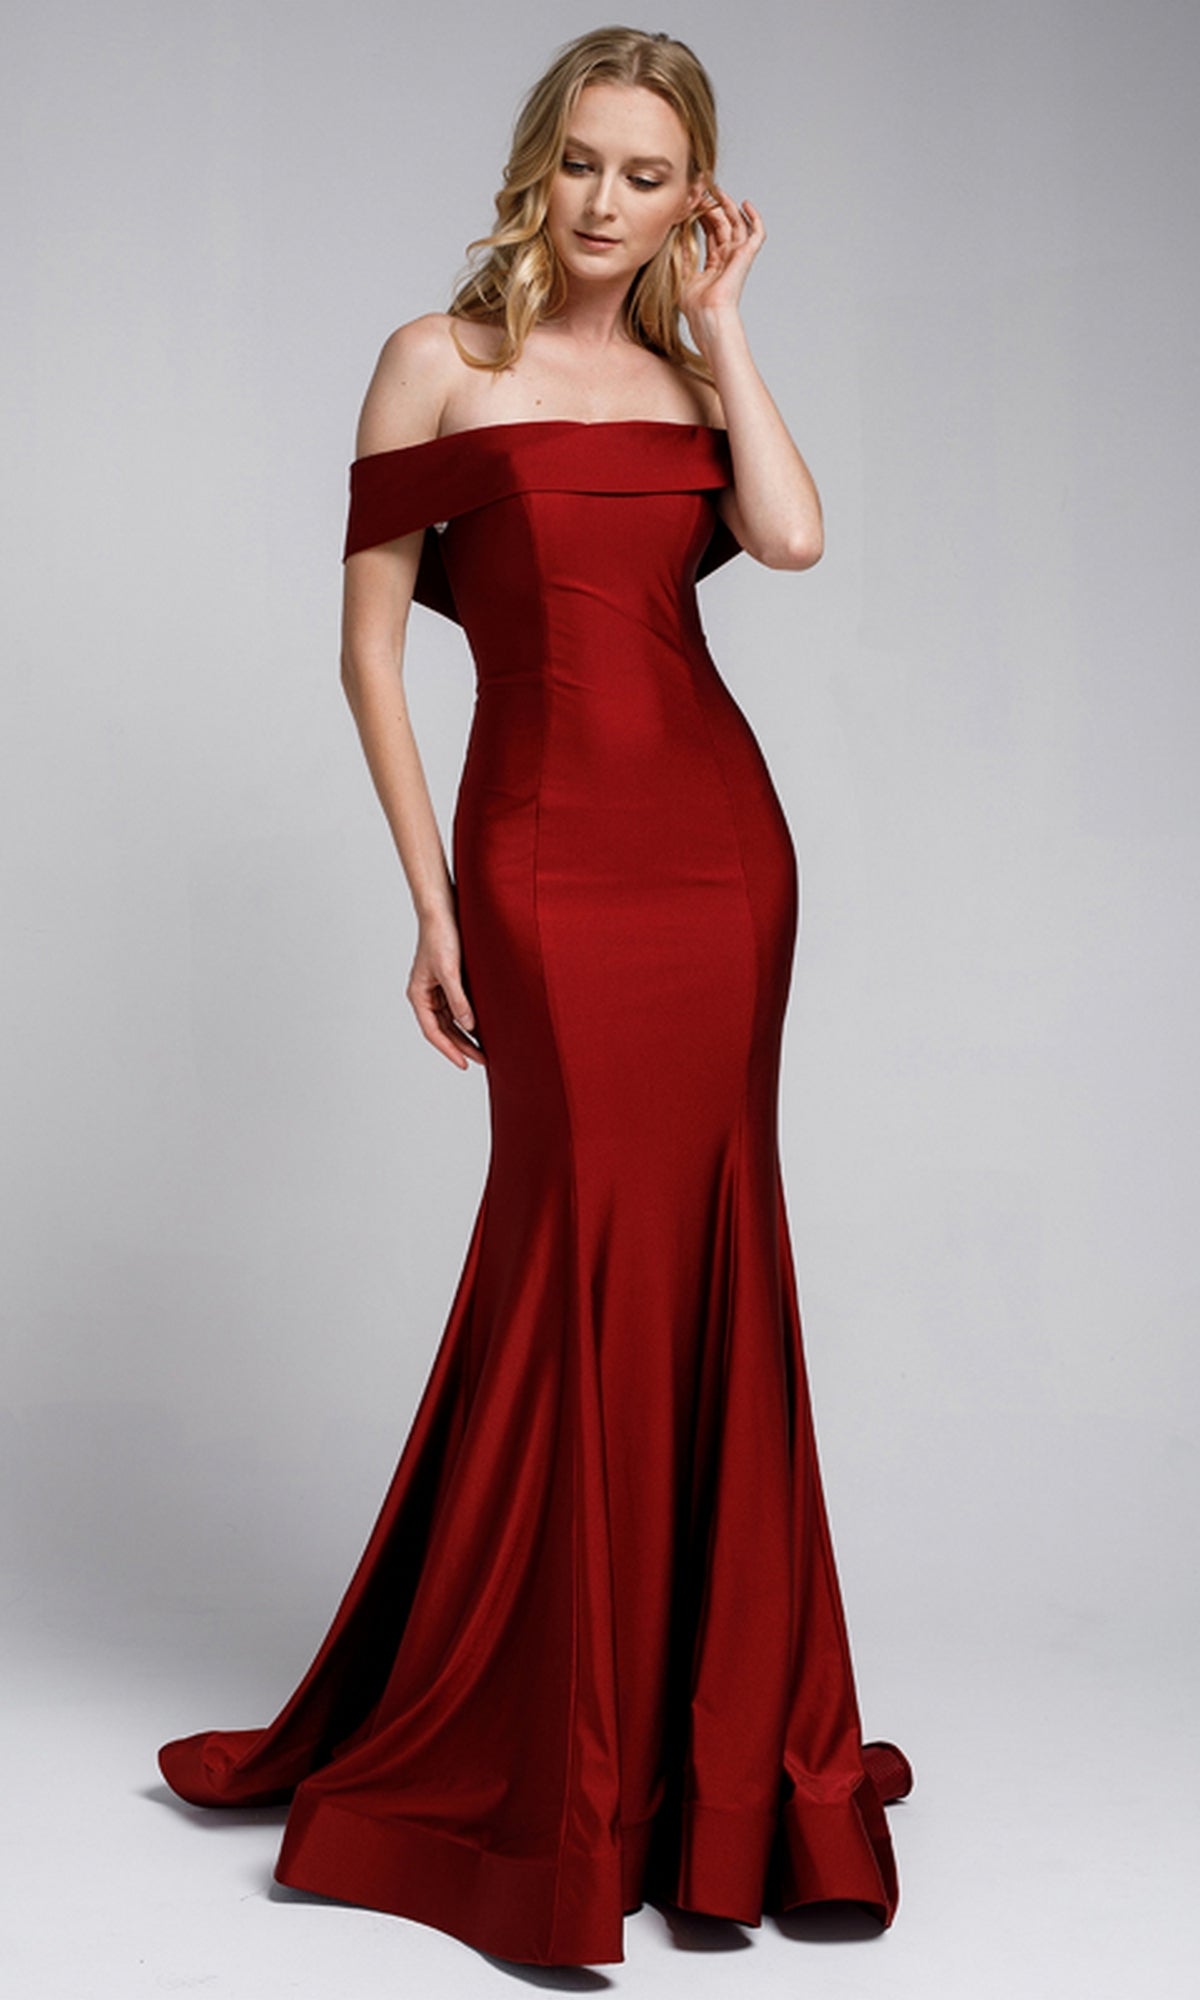 Sleek Simple Off-the-Shoulder Long Prom Dress 373